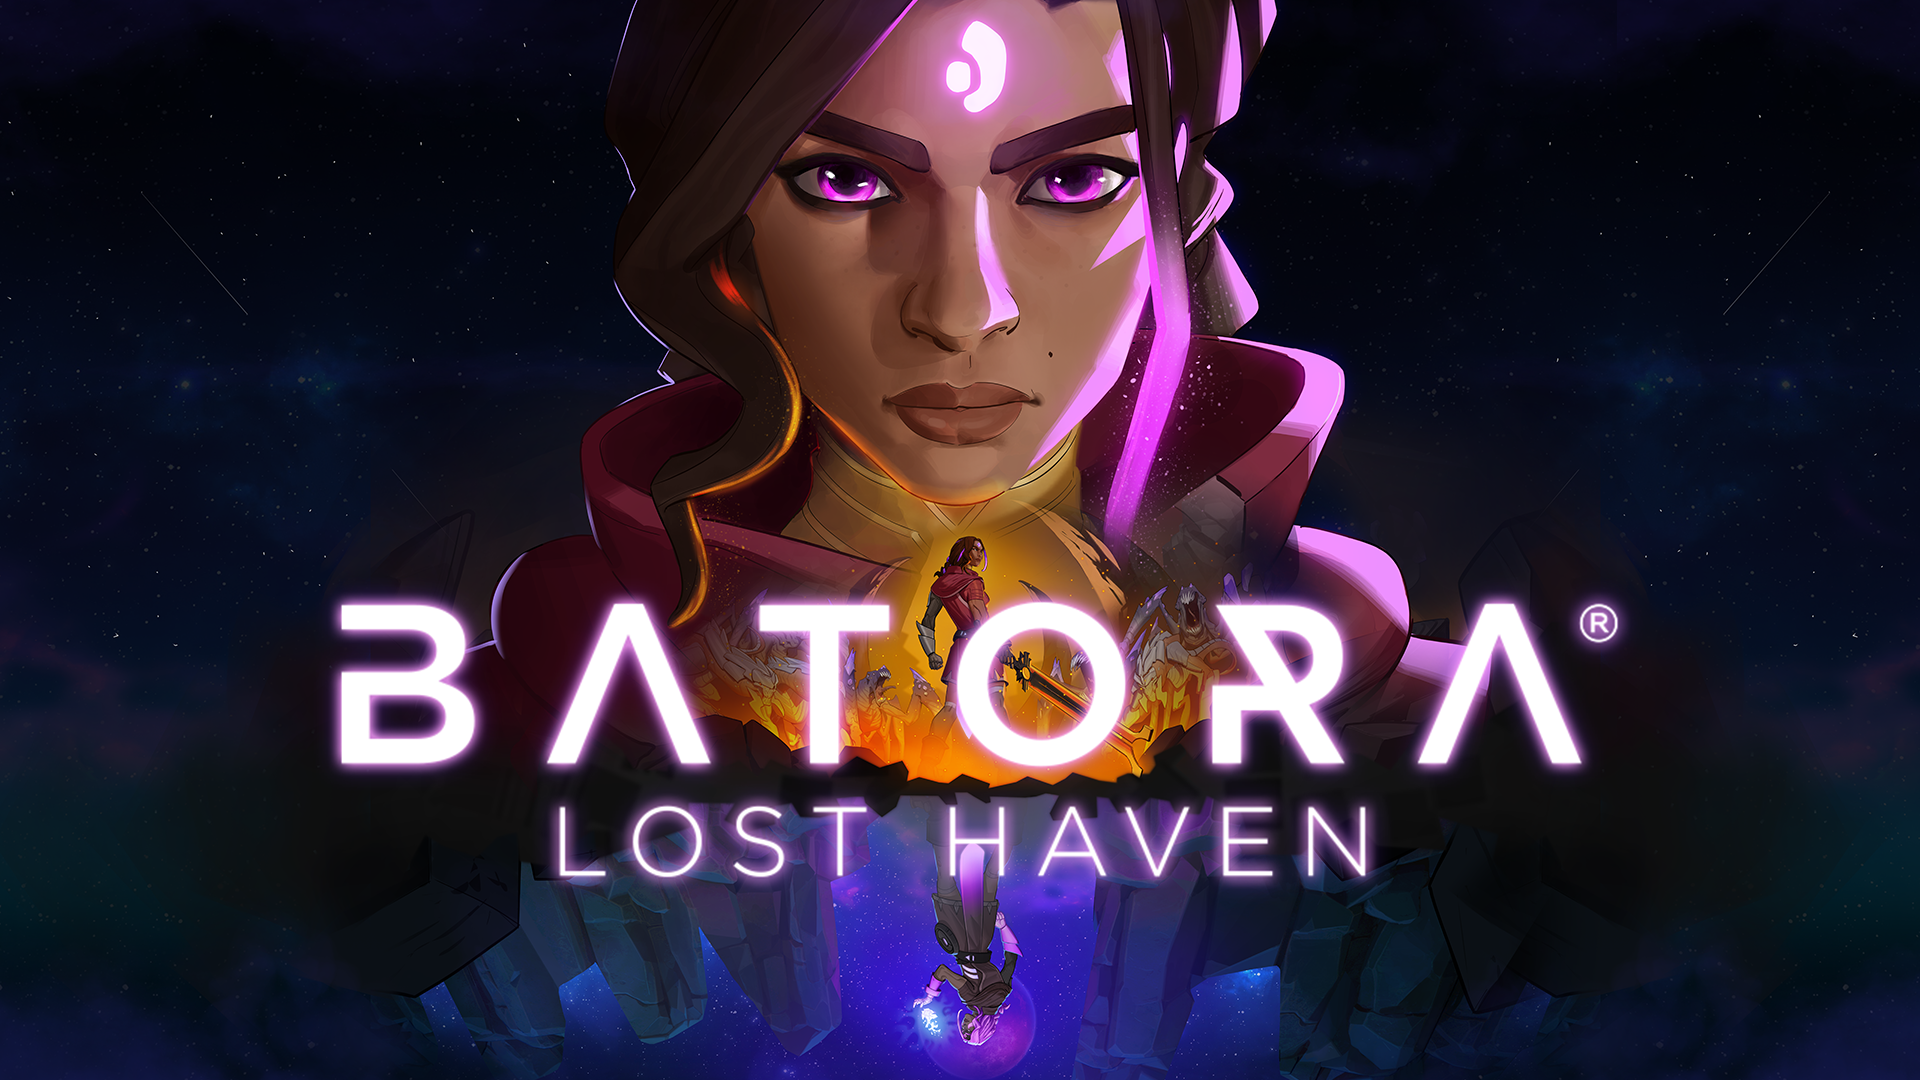 Video Game Batora: Lost Haven HD Wallpaper | Background Image